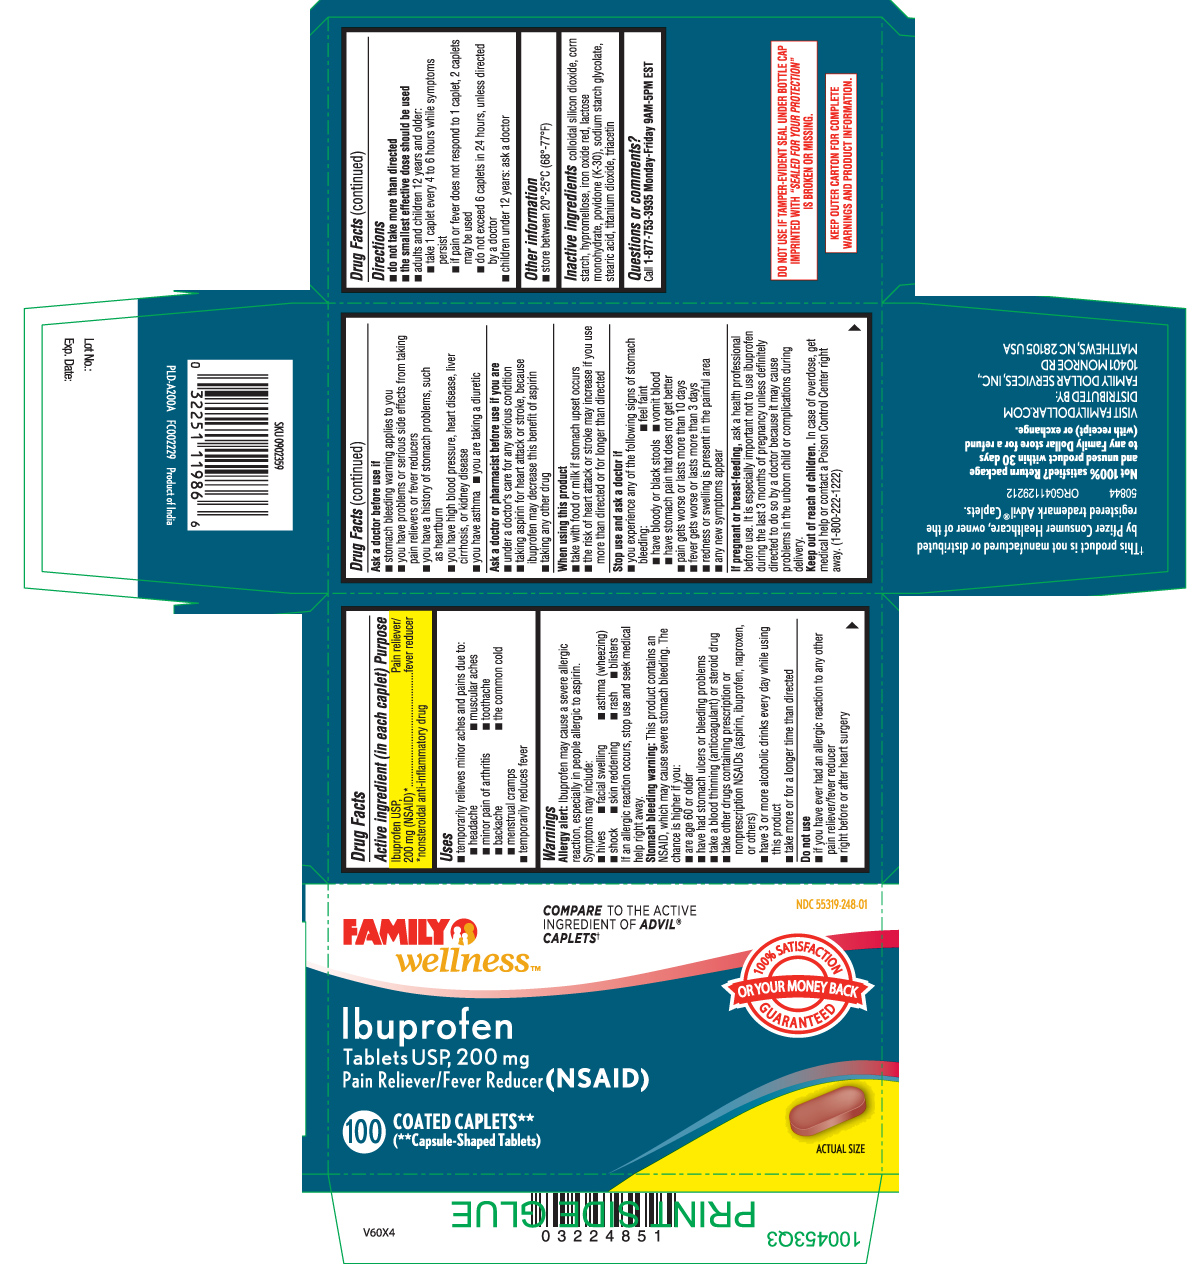 Ibuprofen USP 200 mg